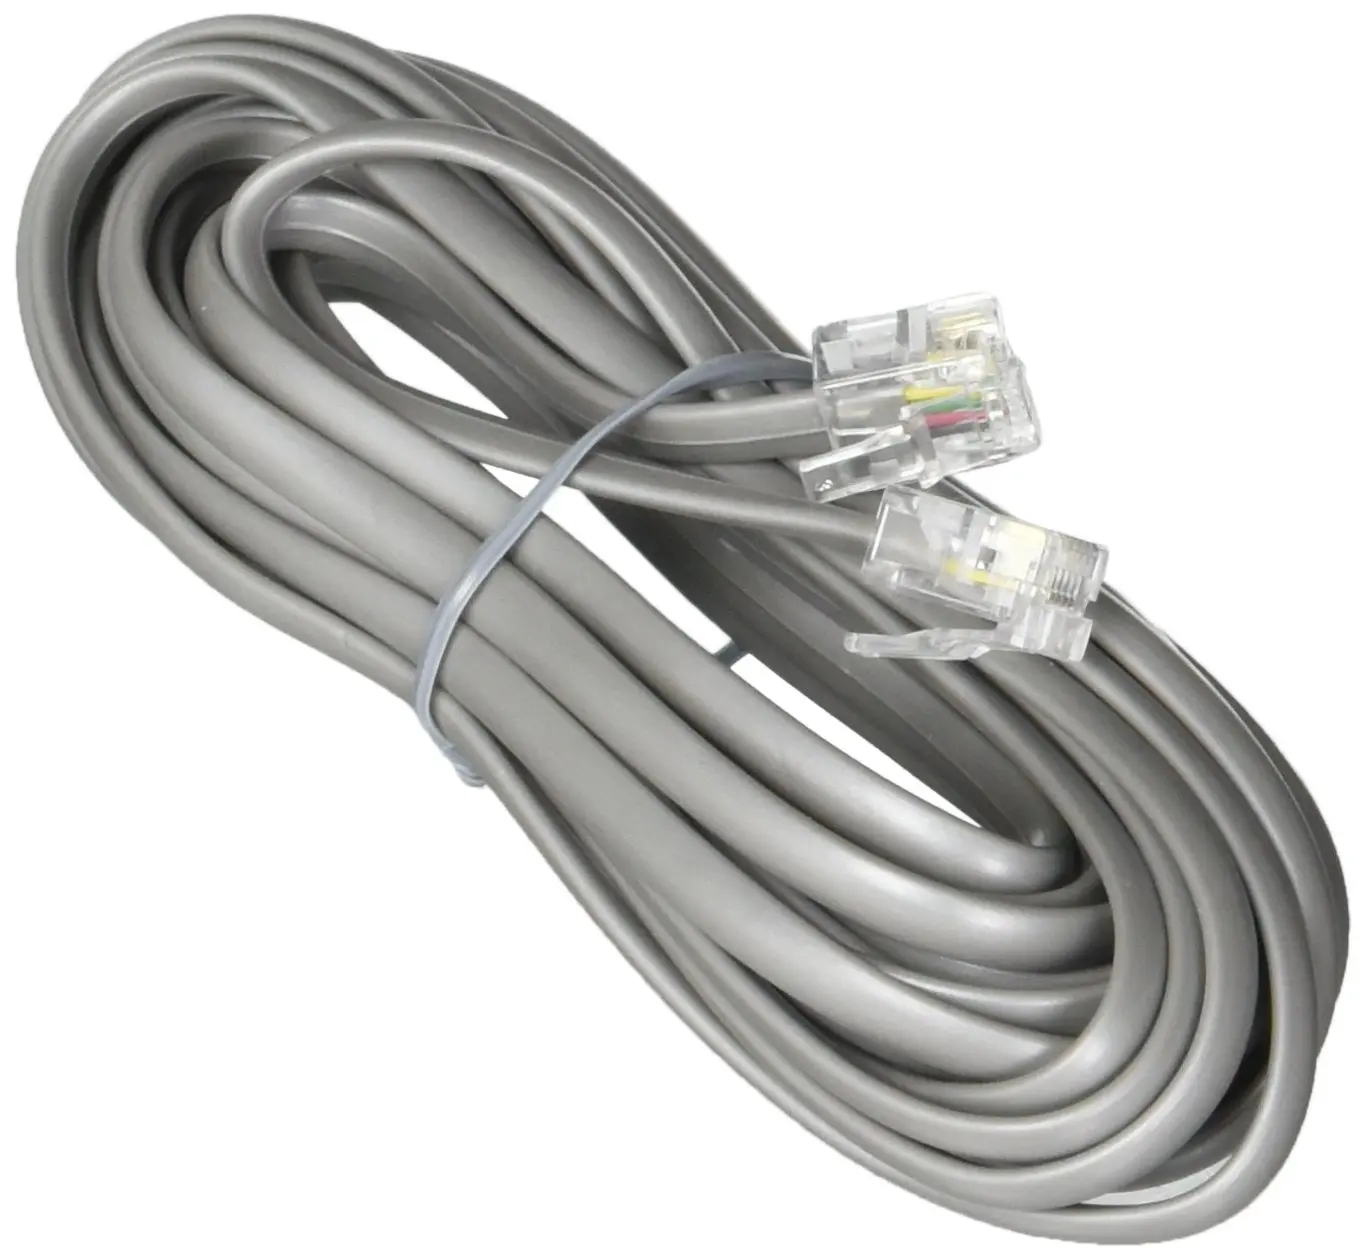 Шнур для подключения телефона. Сетевой кабель Rexant RJ-11 6p4c 10m White 18-3101. Телефонный кабель RJ-11 (6p-4c). Rj11 кабель 0,2 м. Телефонный провод RJ 11 RJ 12.